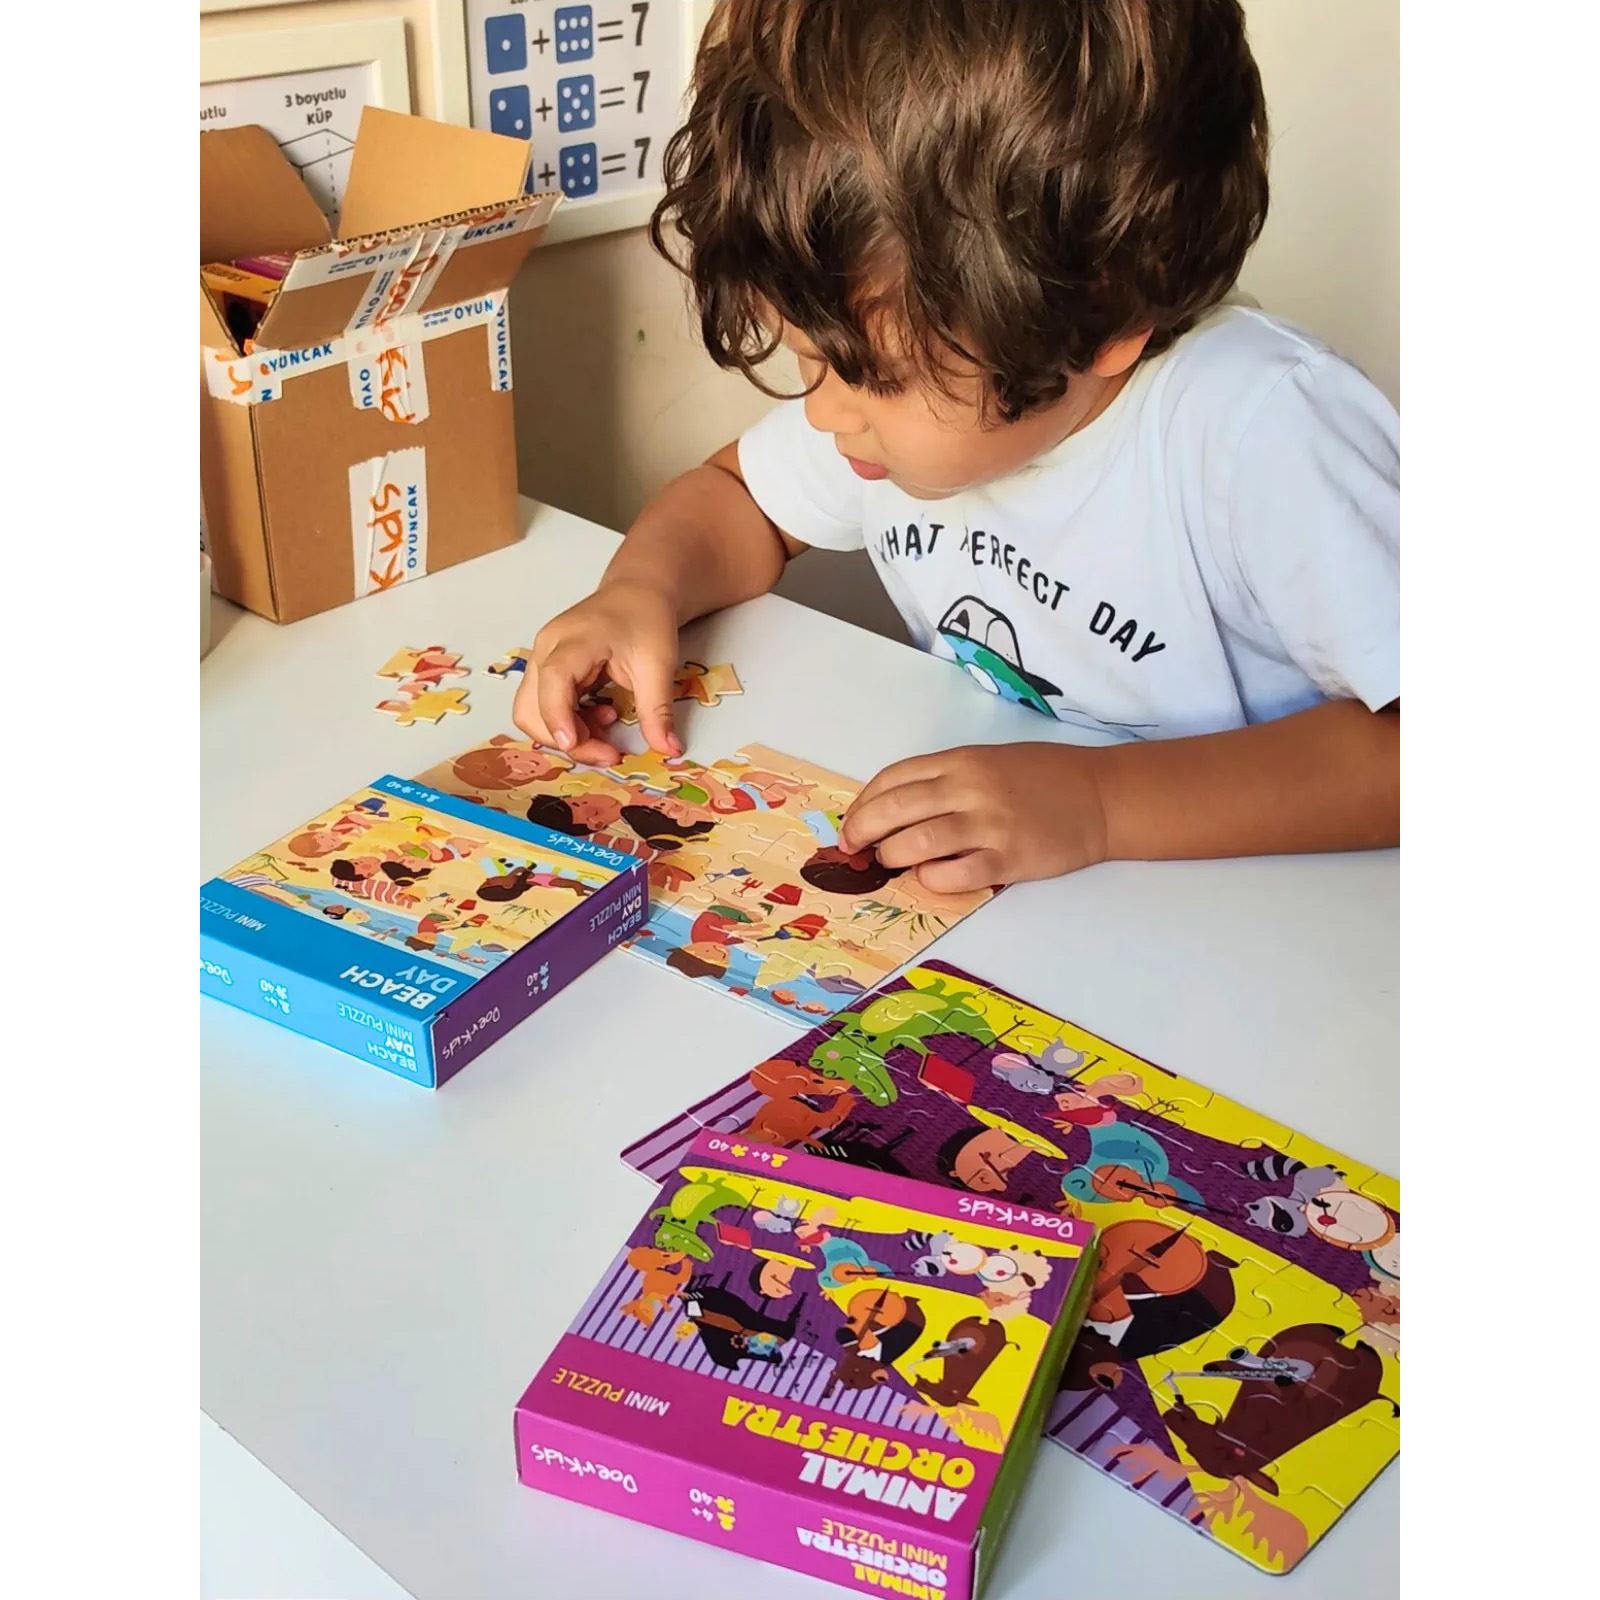 Doer Kids Çocuklar Kumsalda Mini Puzzle 40 Parça Renkli